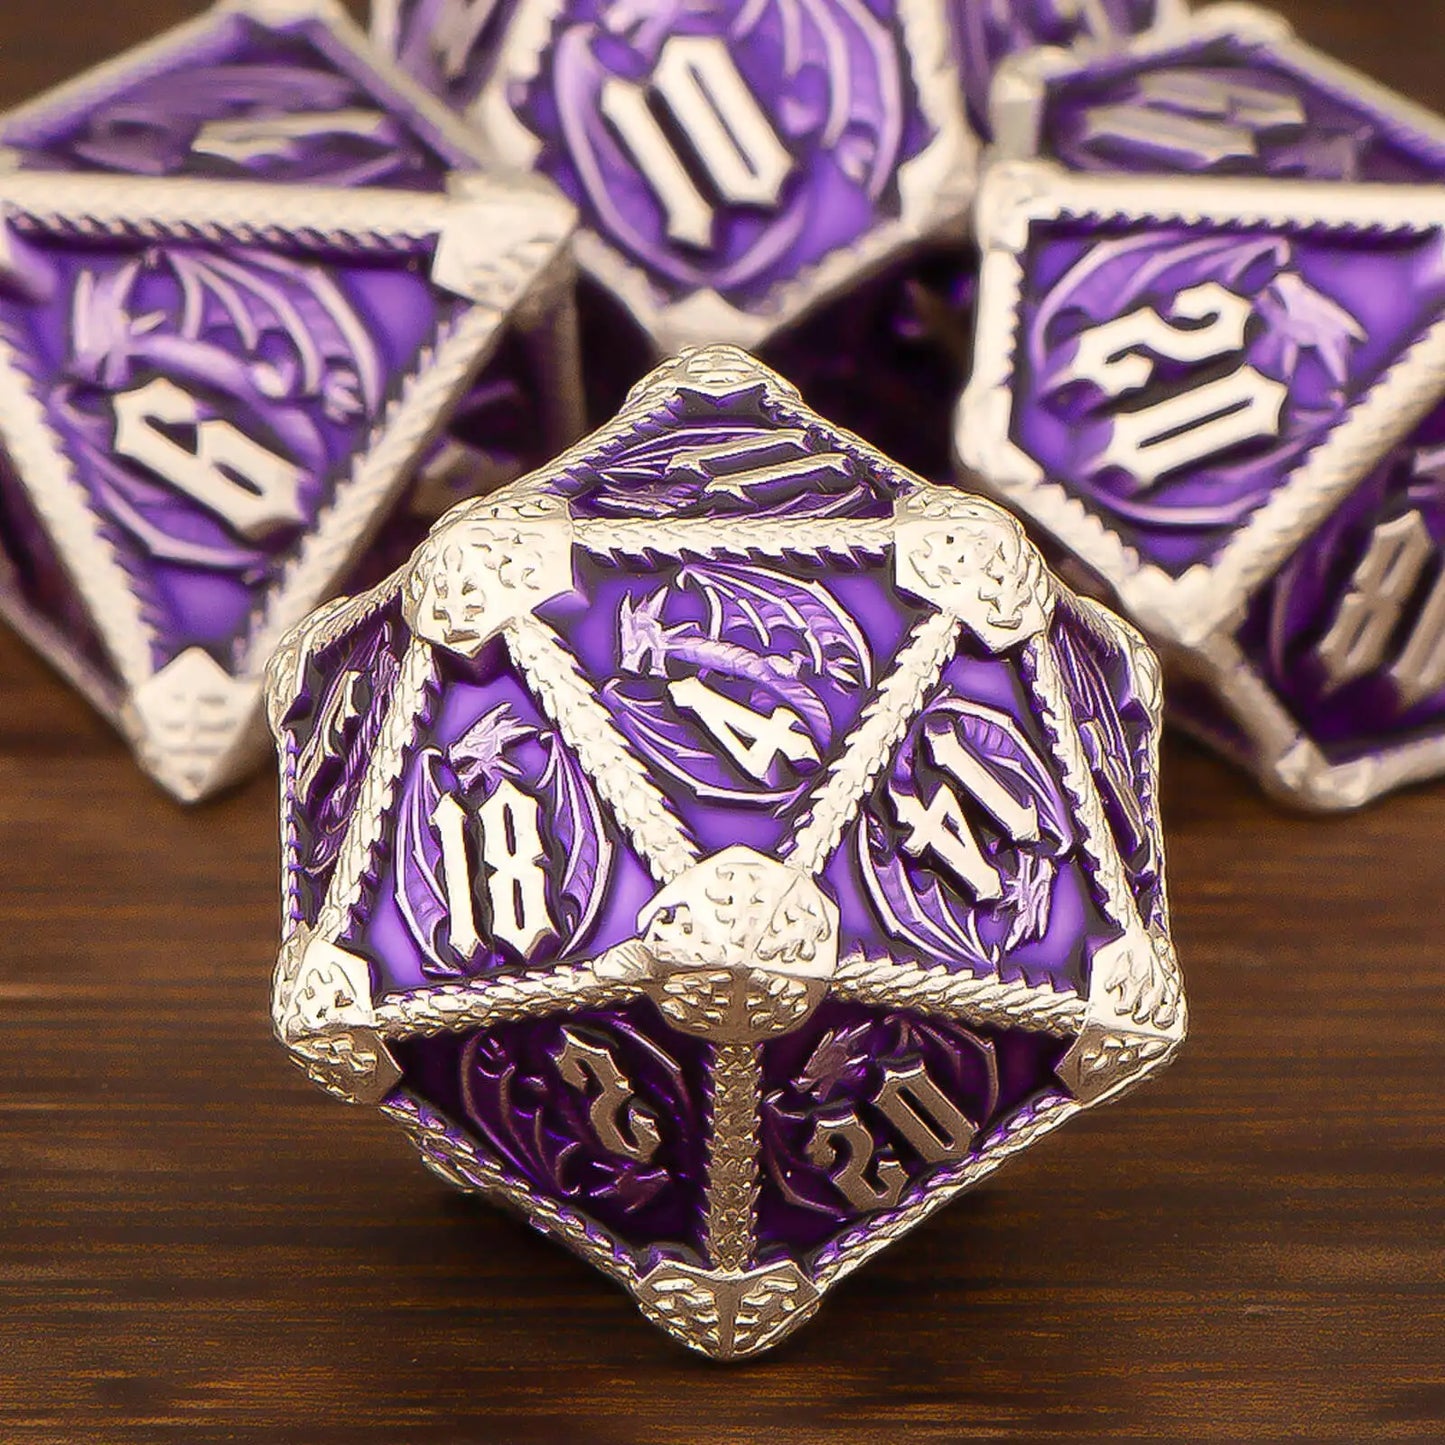 Ethereal Drakon 7 Dice Set | Nebula Knight Purple